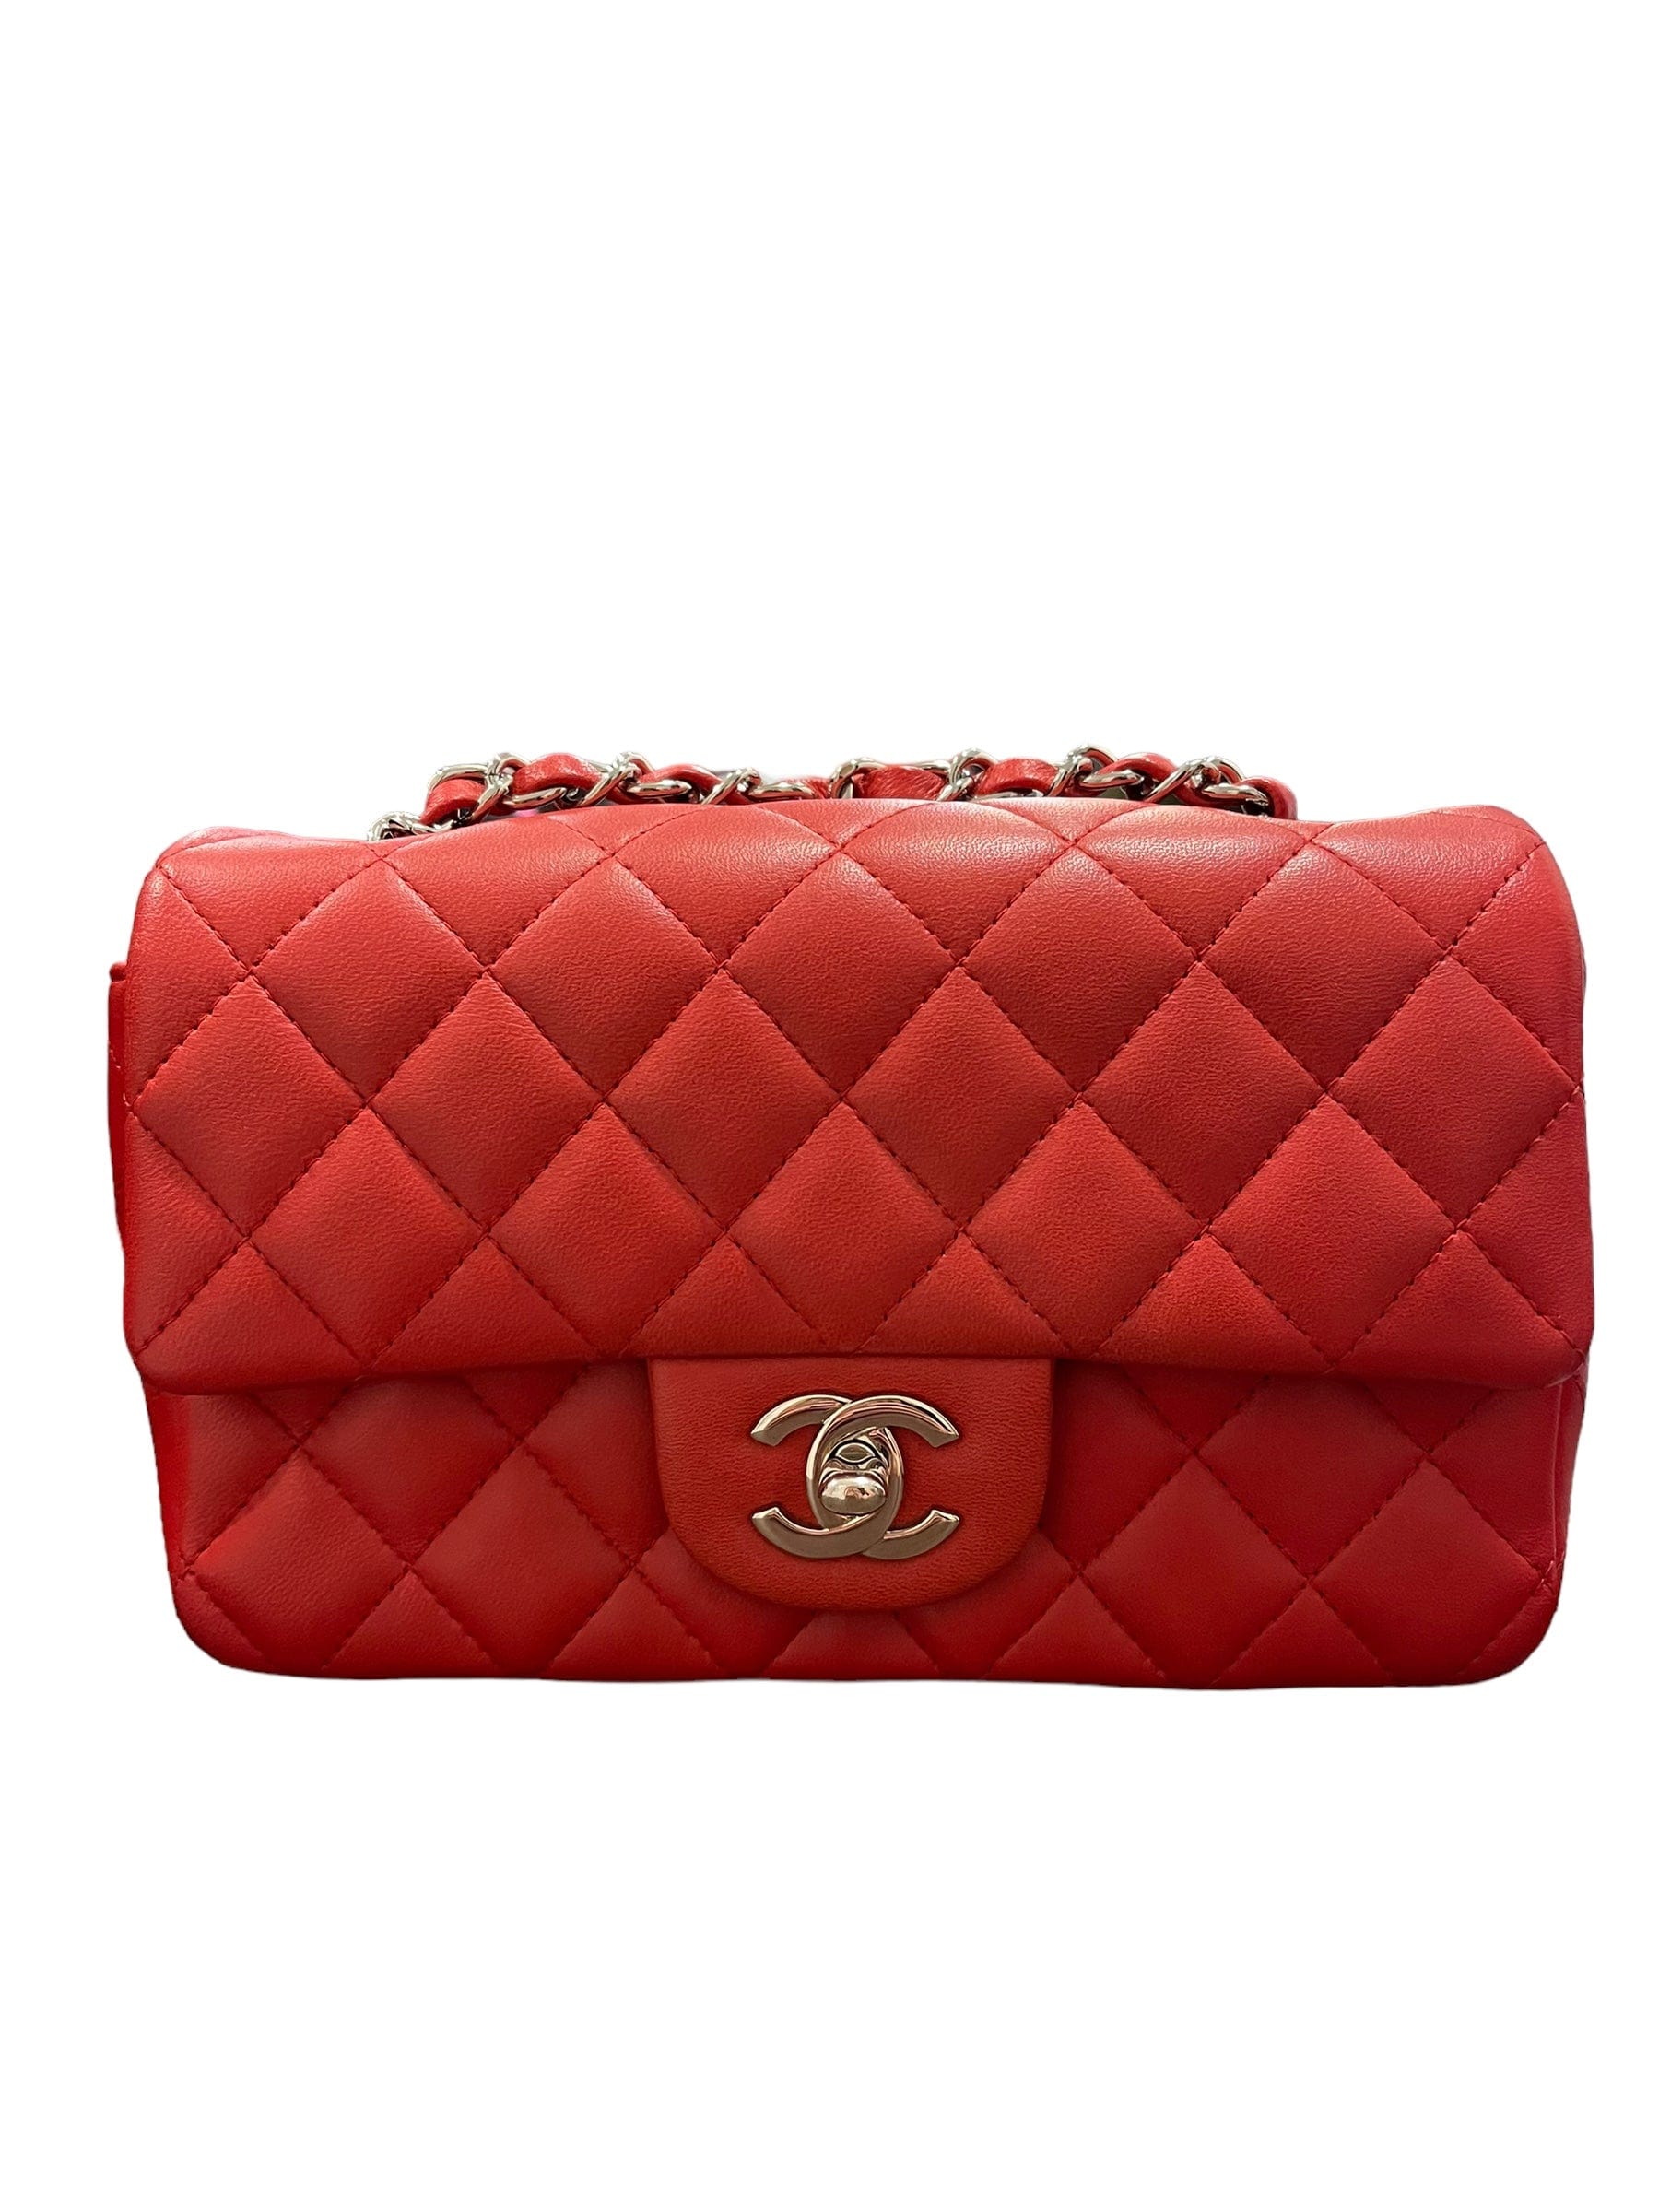 Chanel Chanel Mini Rectangle Red Lambskin SHW #18